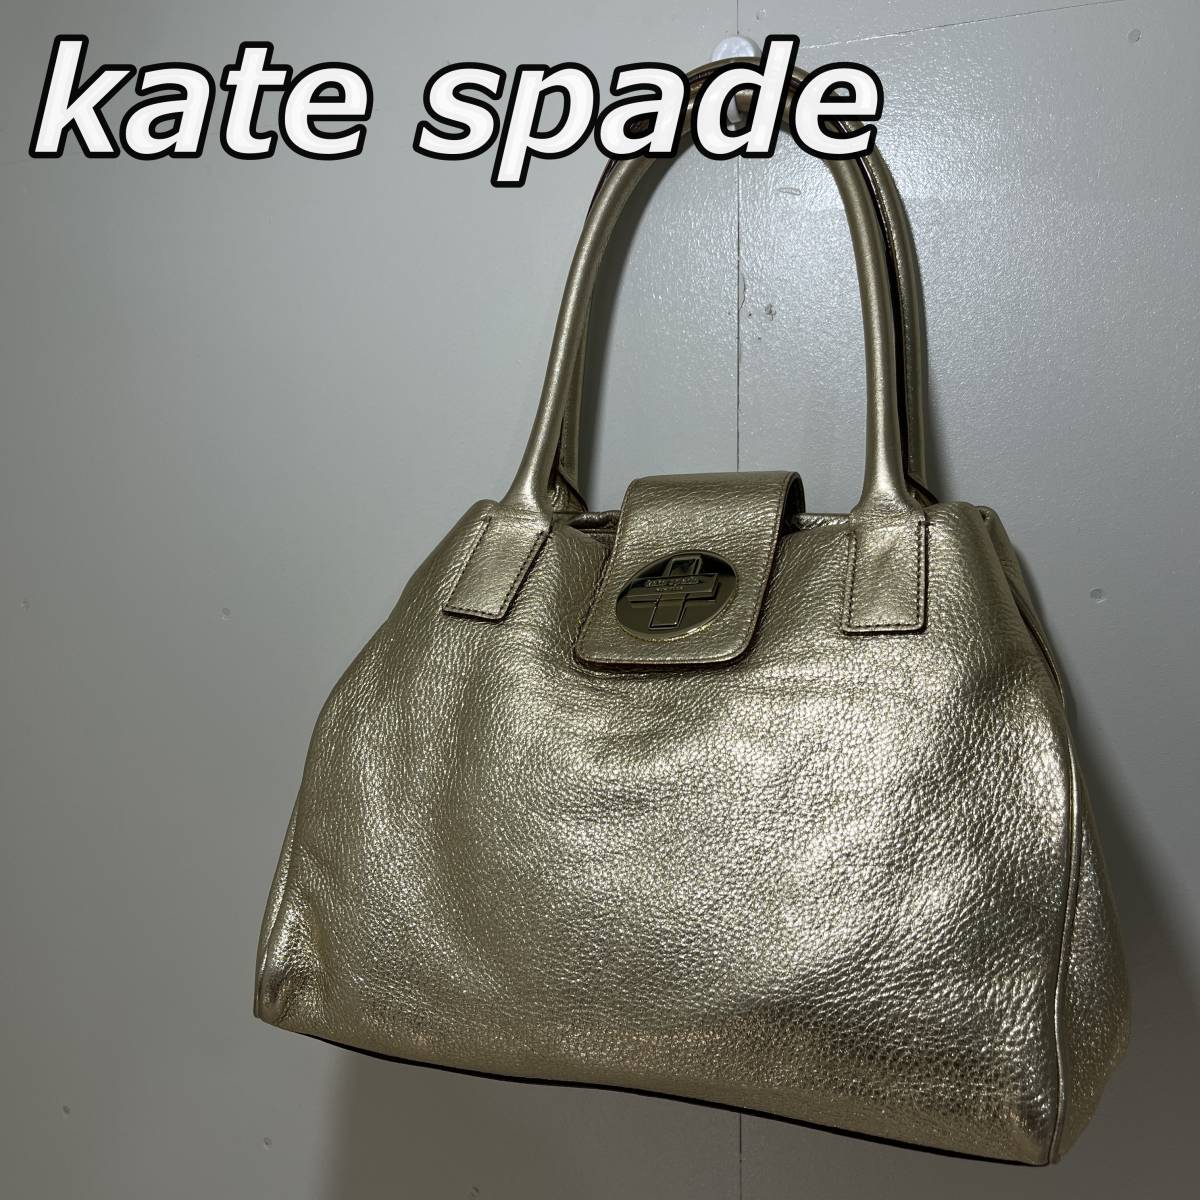 【kate spade】ケイトスペード ハンドバッグ トート 手持ちカバン レザー 本革 金色 ゴールド WKRU0844 Q064